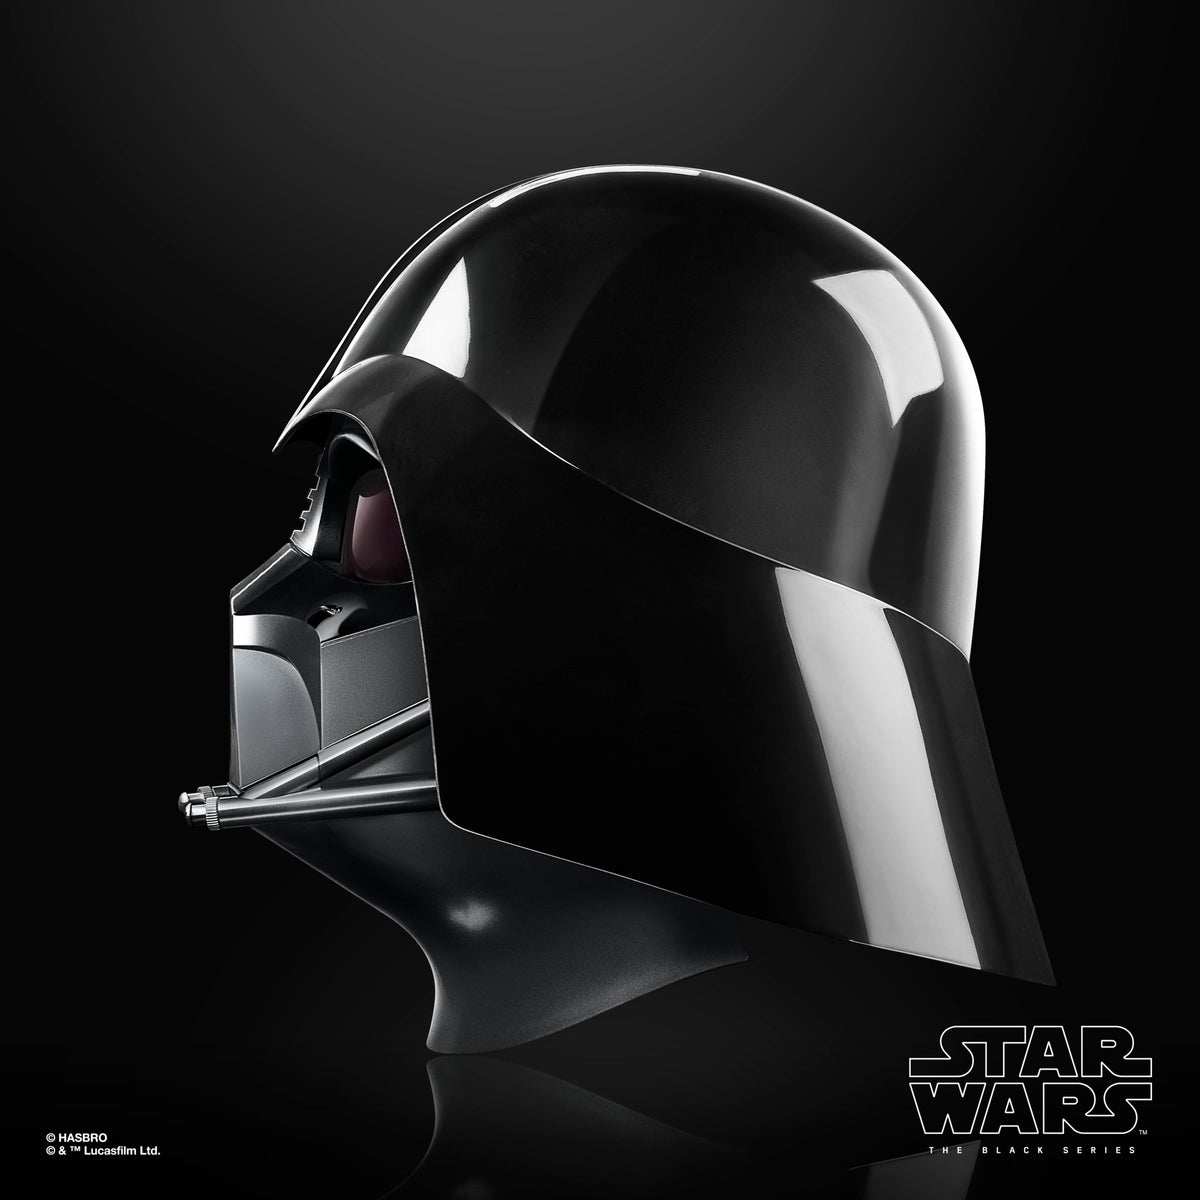 Bij zonsopgang Middel Vacature Star Wars The Black Series Darth Vader Premium Electronic Helmet – Hasbro  Pulse